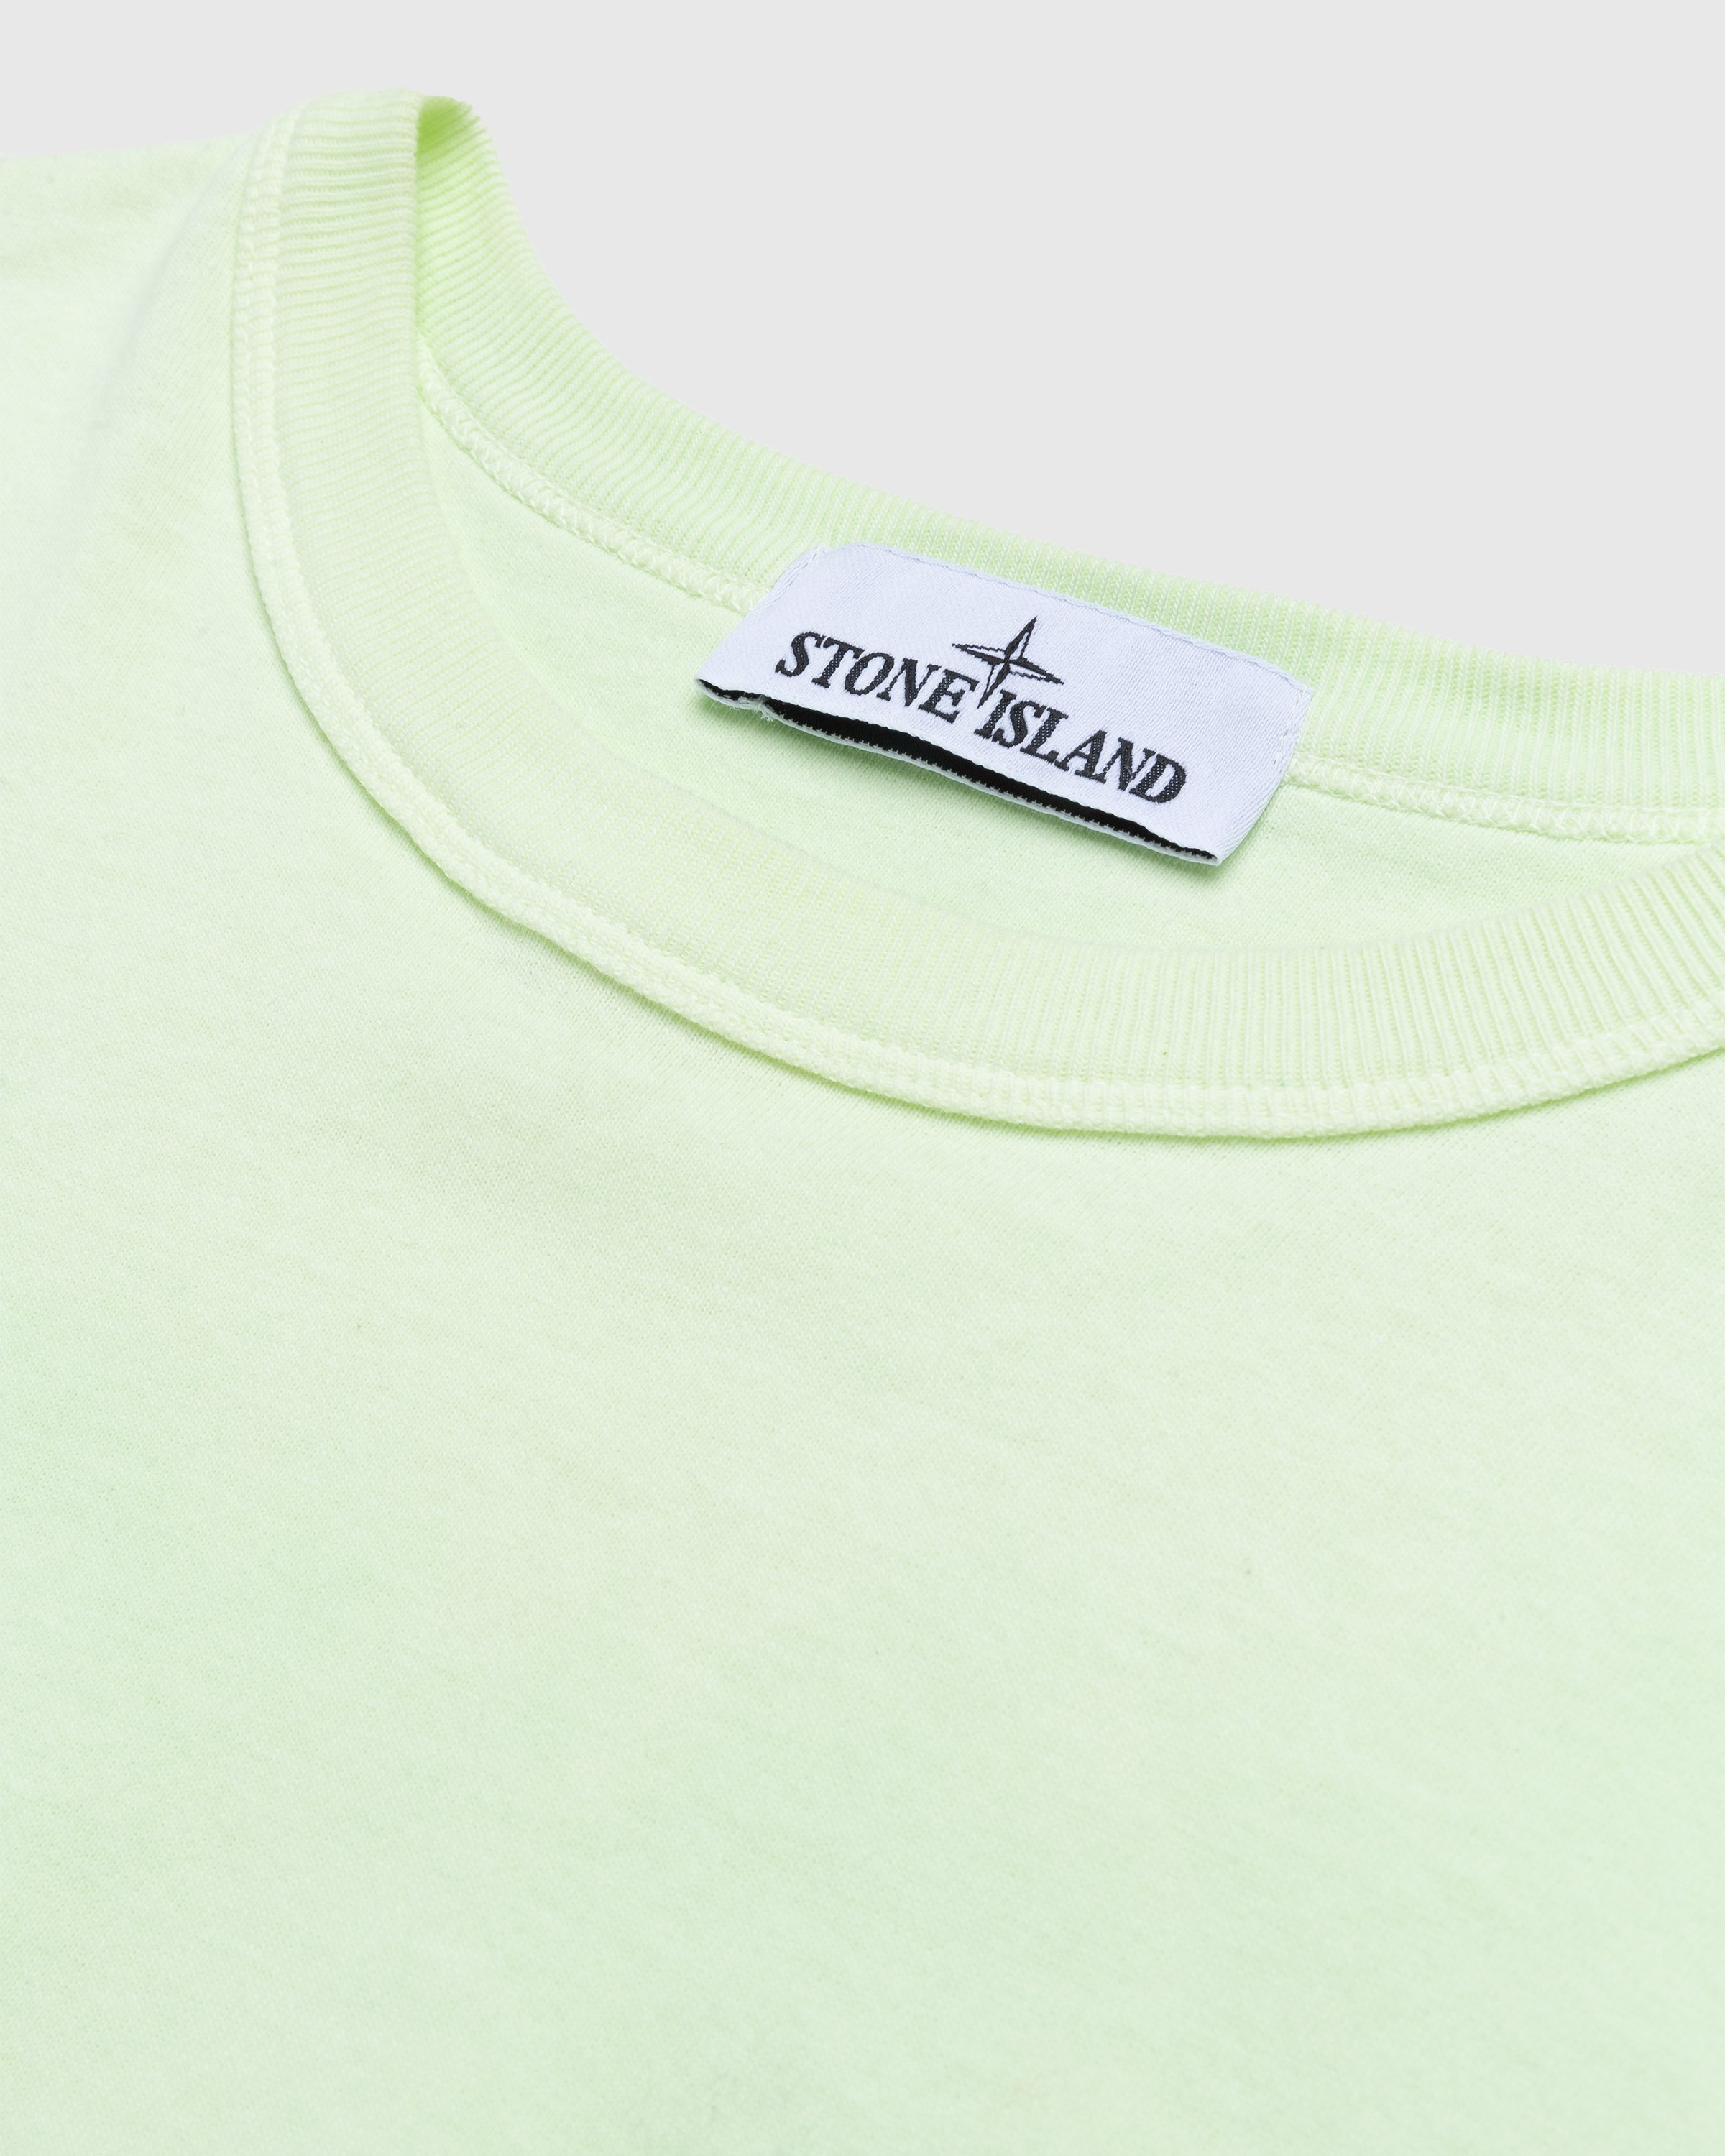 Stone Island - T-Shirt M/Lunga Green 21244 - Clothing - Green - Image 6